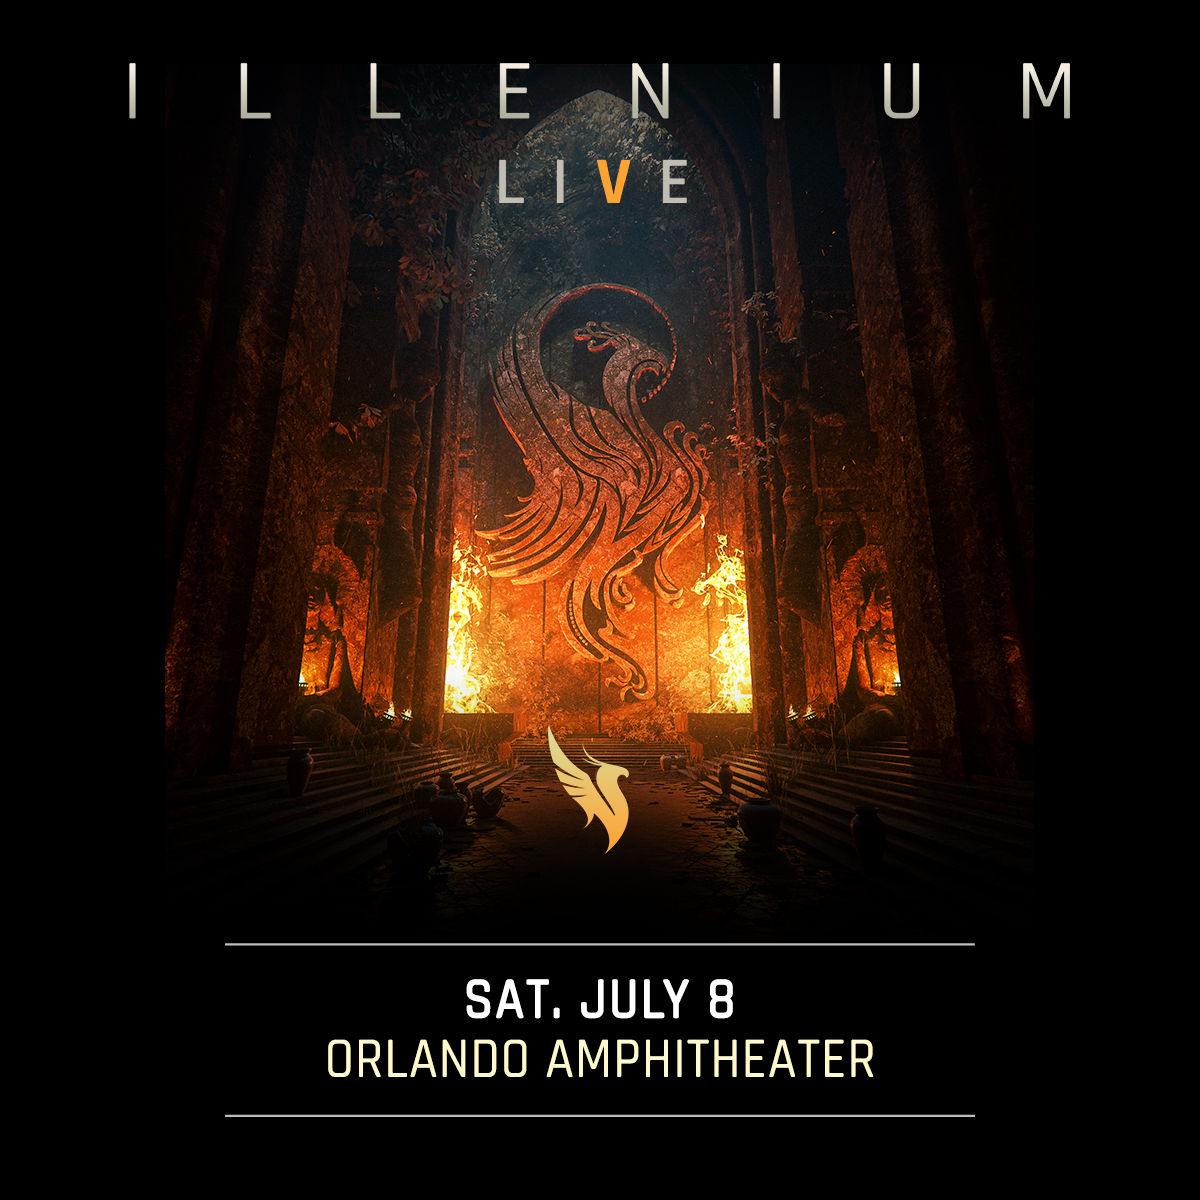 Events Orlando Amphitheater